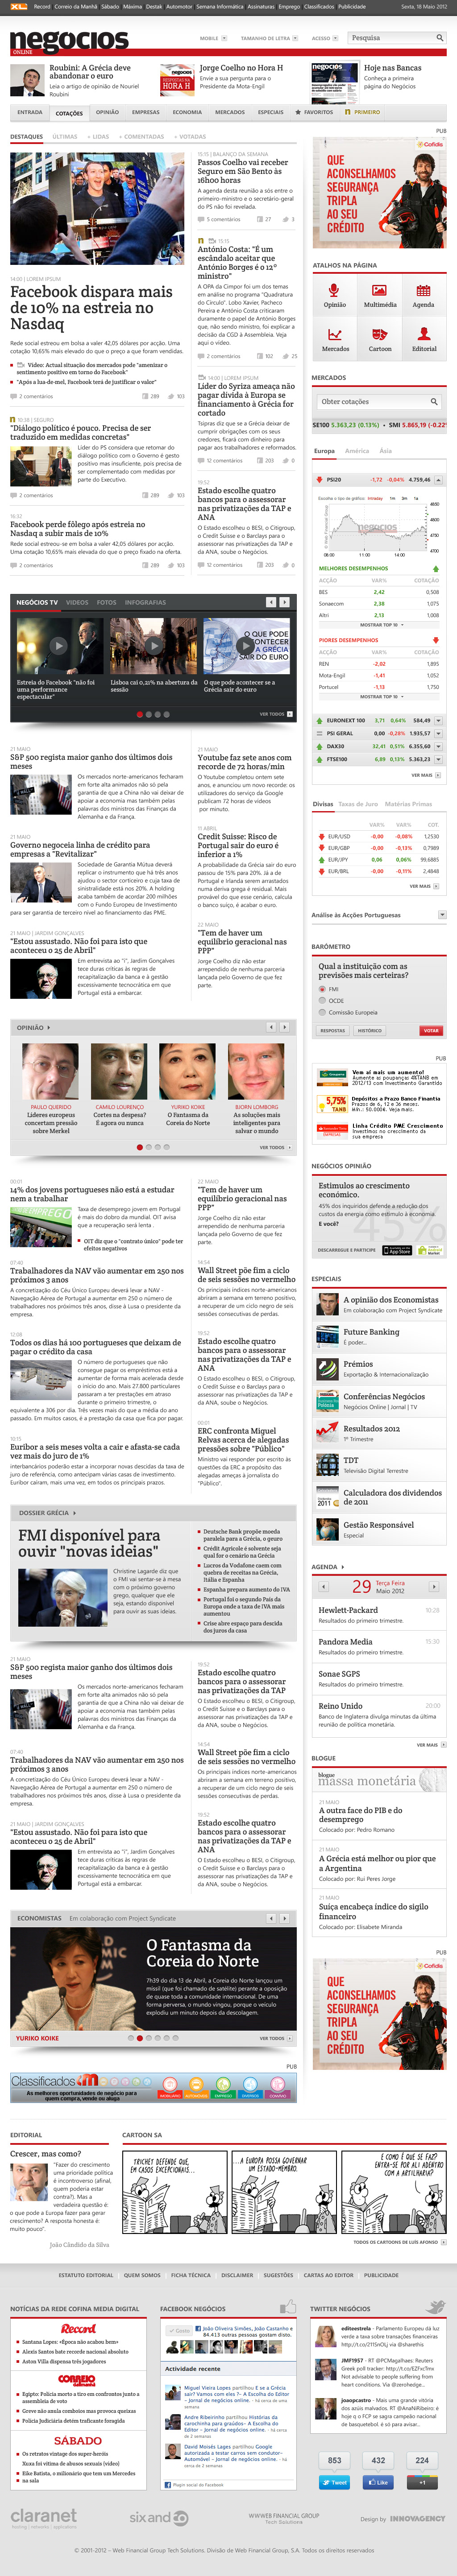 news business newspaper Website Portugal